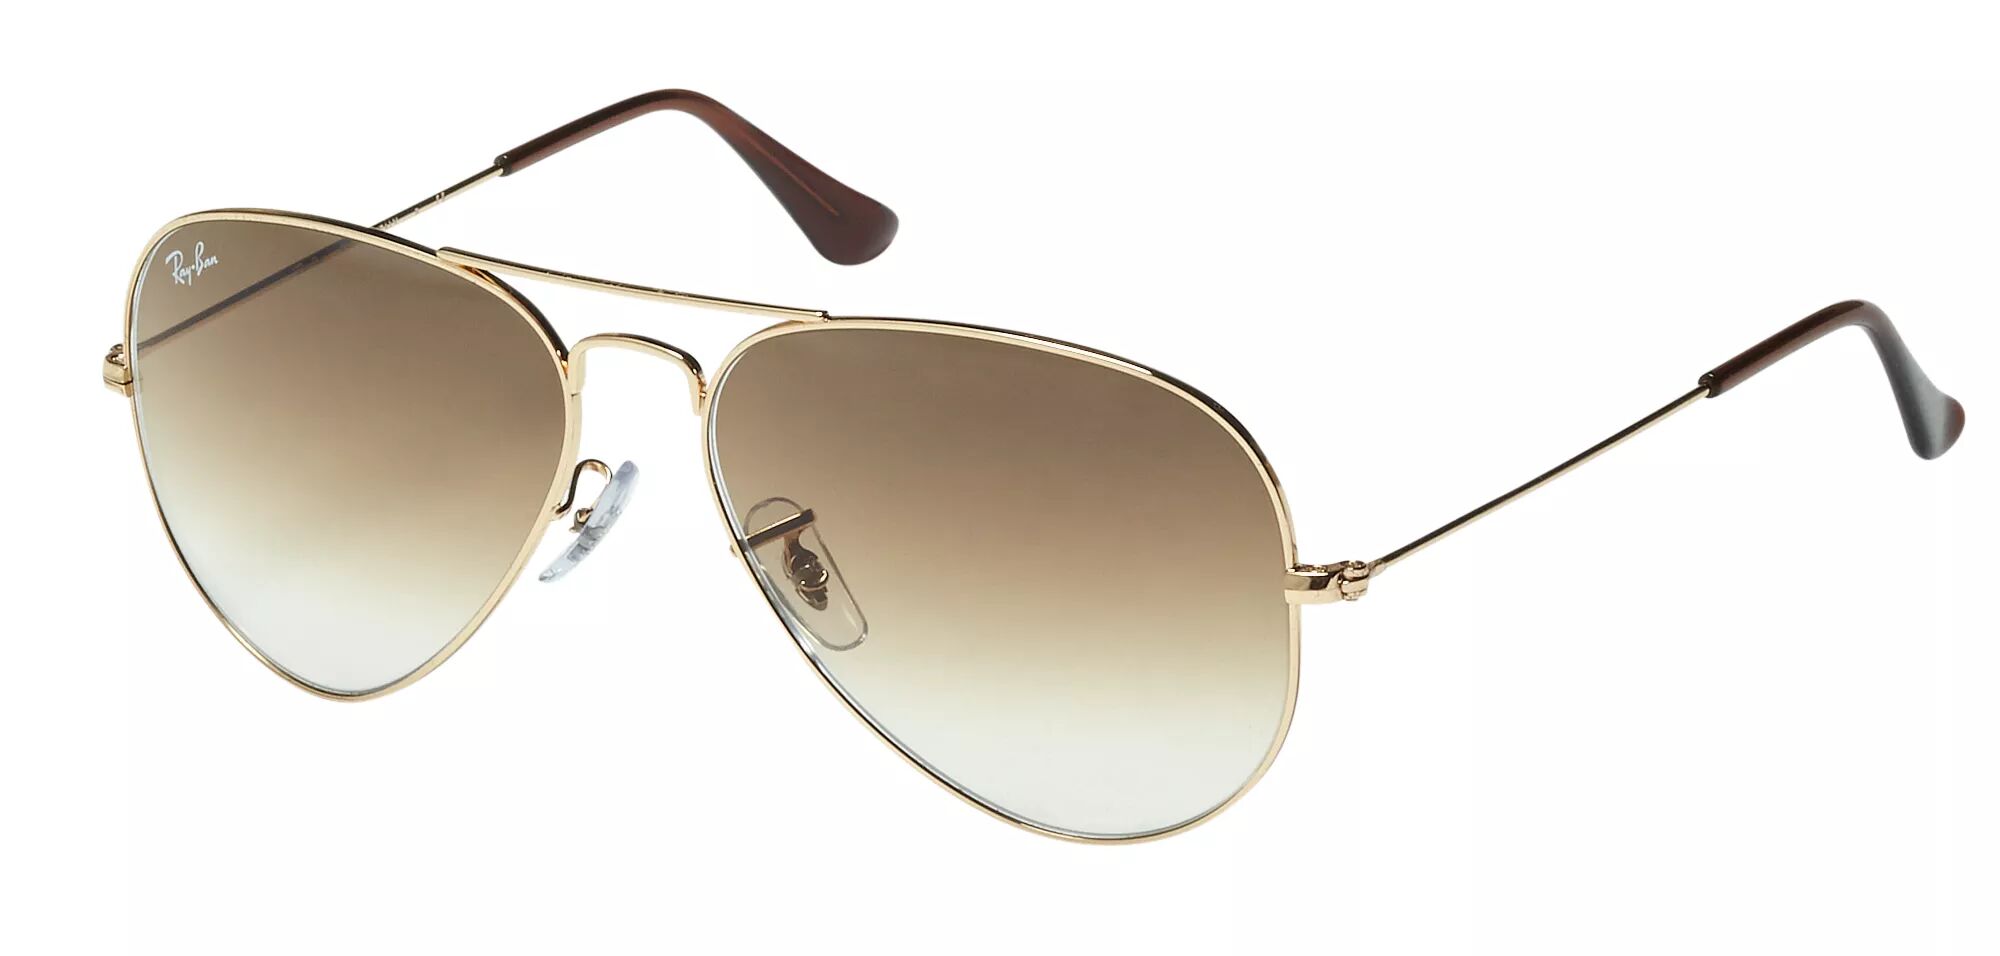 Ray-Ban Aviator Sunglasses, Men's, Gold/Light Brown Gradient